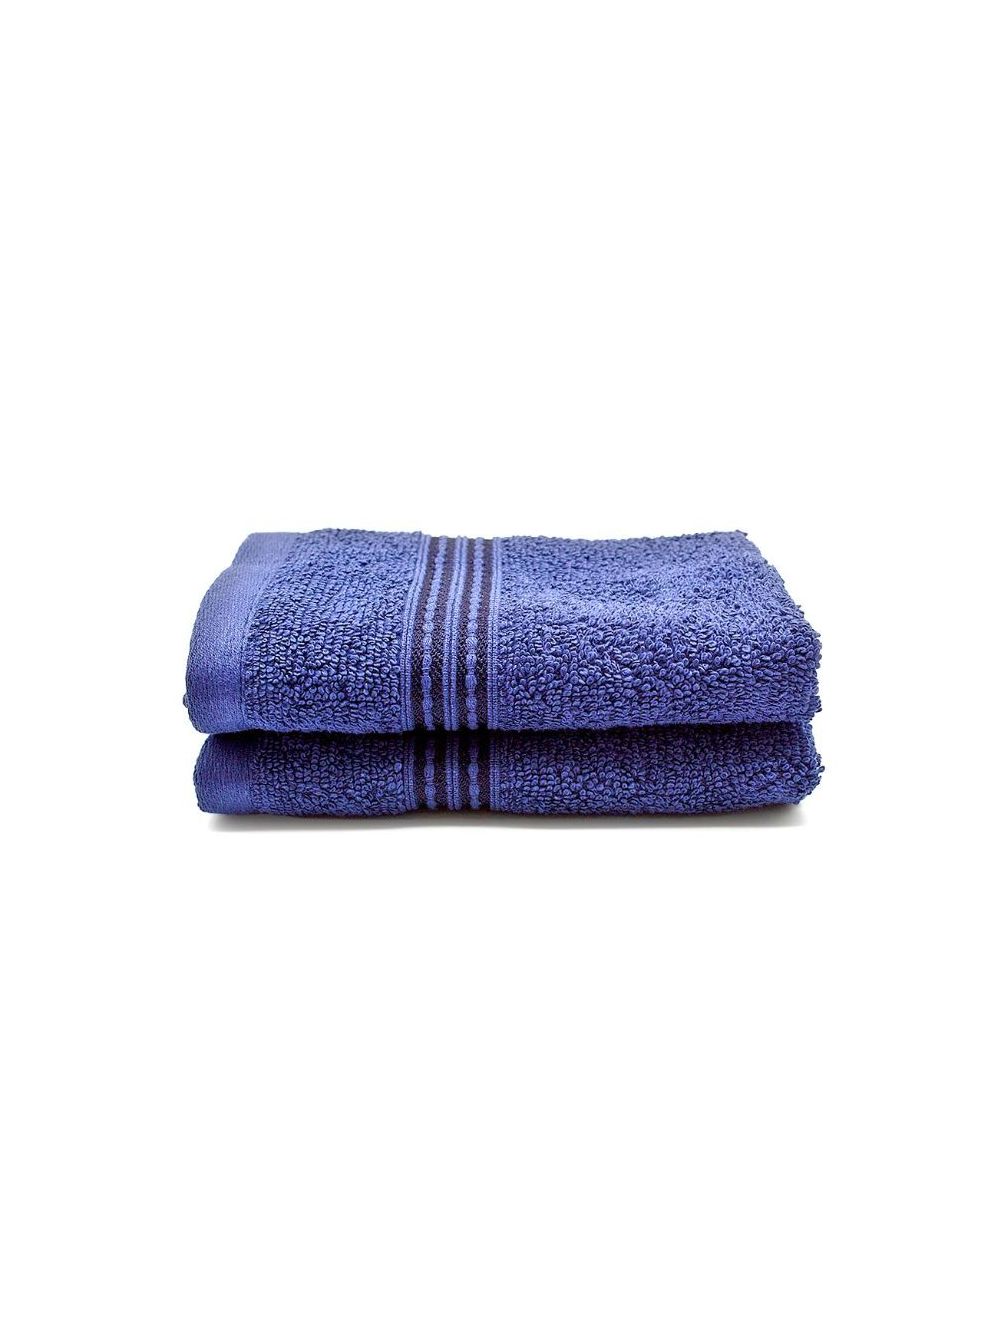 Rahalife 100% Cotton 2-Piece Face Towel Set, Classic Collection, Blue-14RLFT037